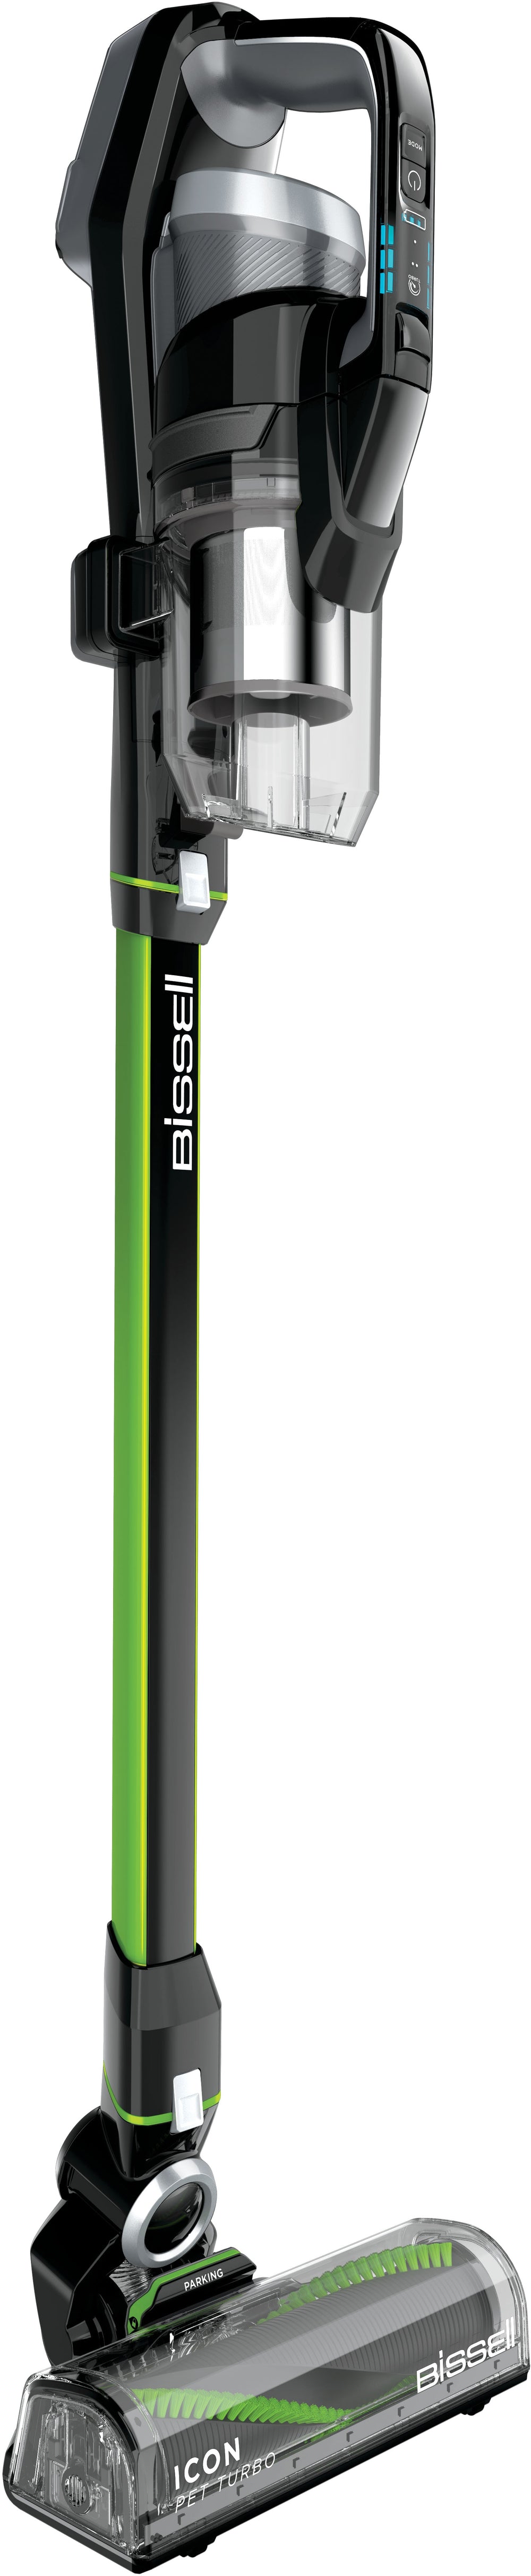 BISSELL ICONPET TURBO EDGE Cordless Stick Vacuum - Black, Cha Cha Lime_1